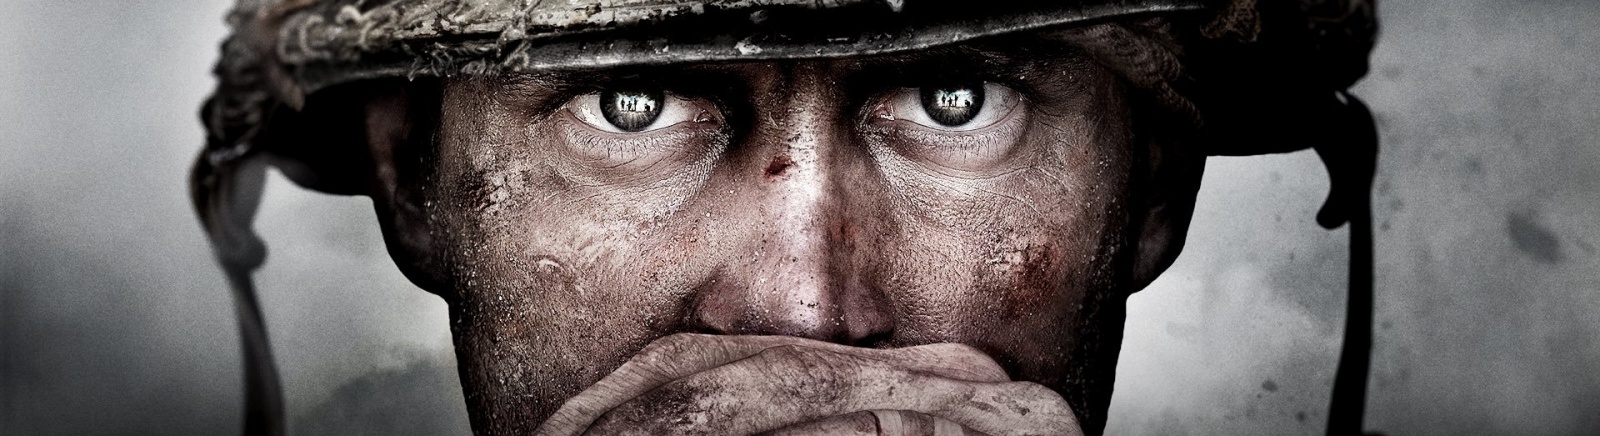 Дата выхода Call of Duty: WWII (Call of Duty: WW2)  на PC, PS4 и Xbox One в России и во всем мире